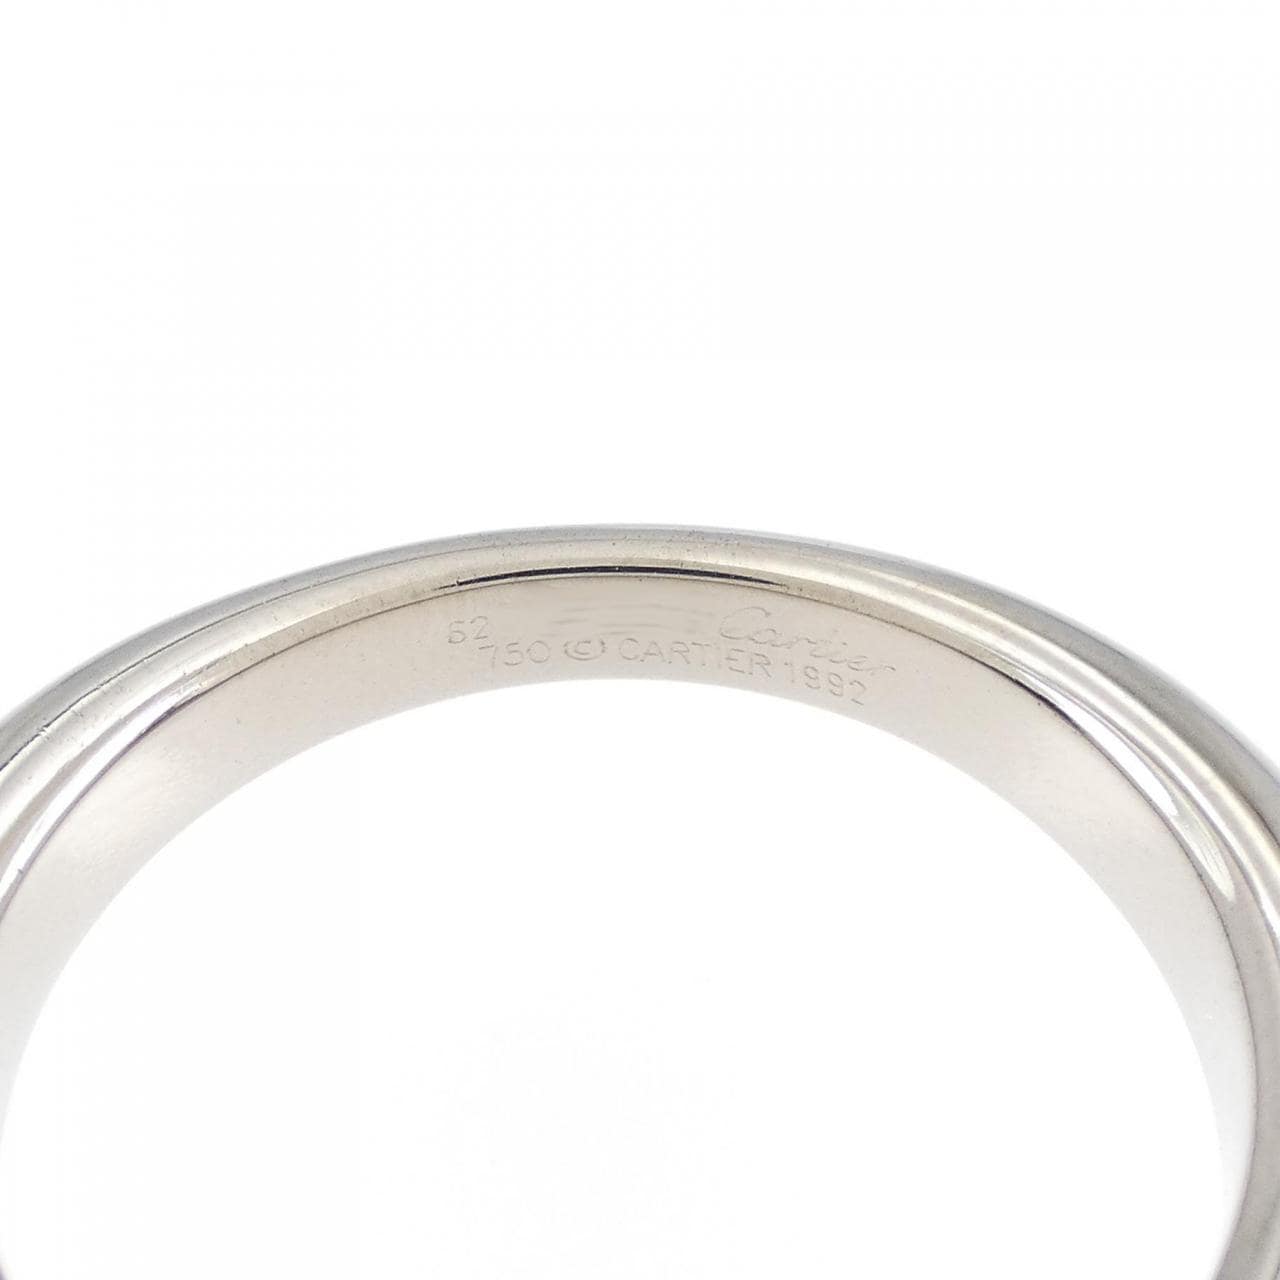 Cartier ellipse ring